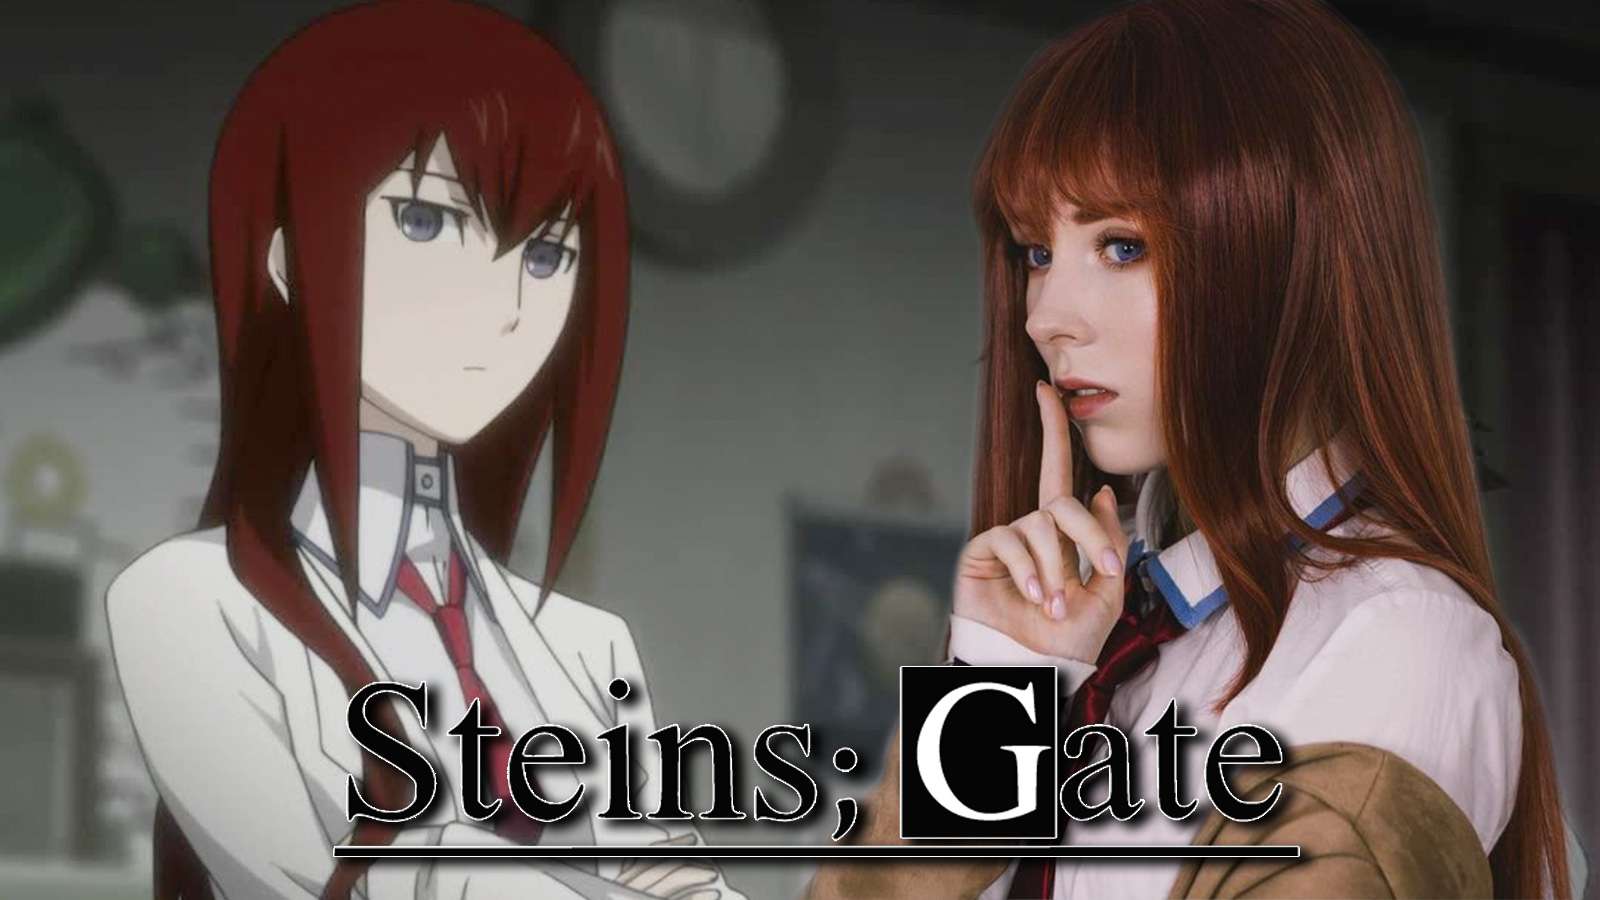 Screenshot of Makise Kurisu in Steins;Gate anime next to cosplayer.